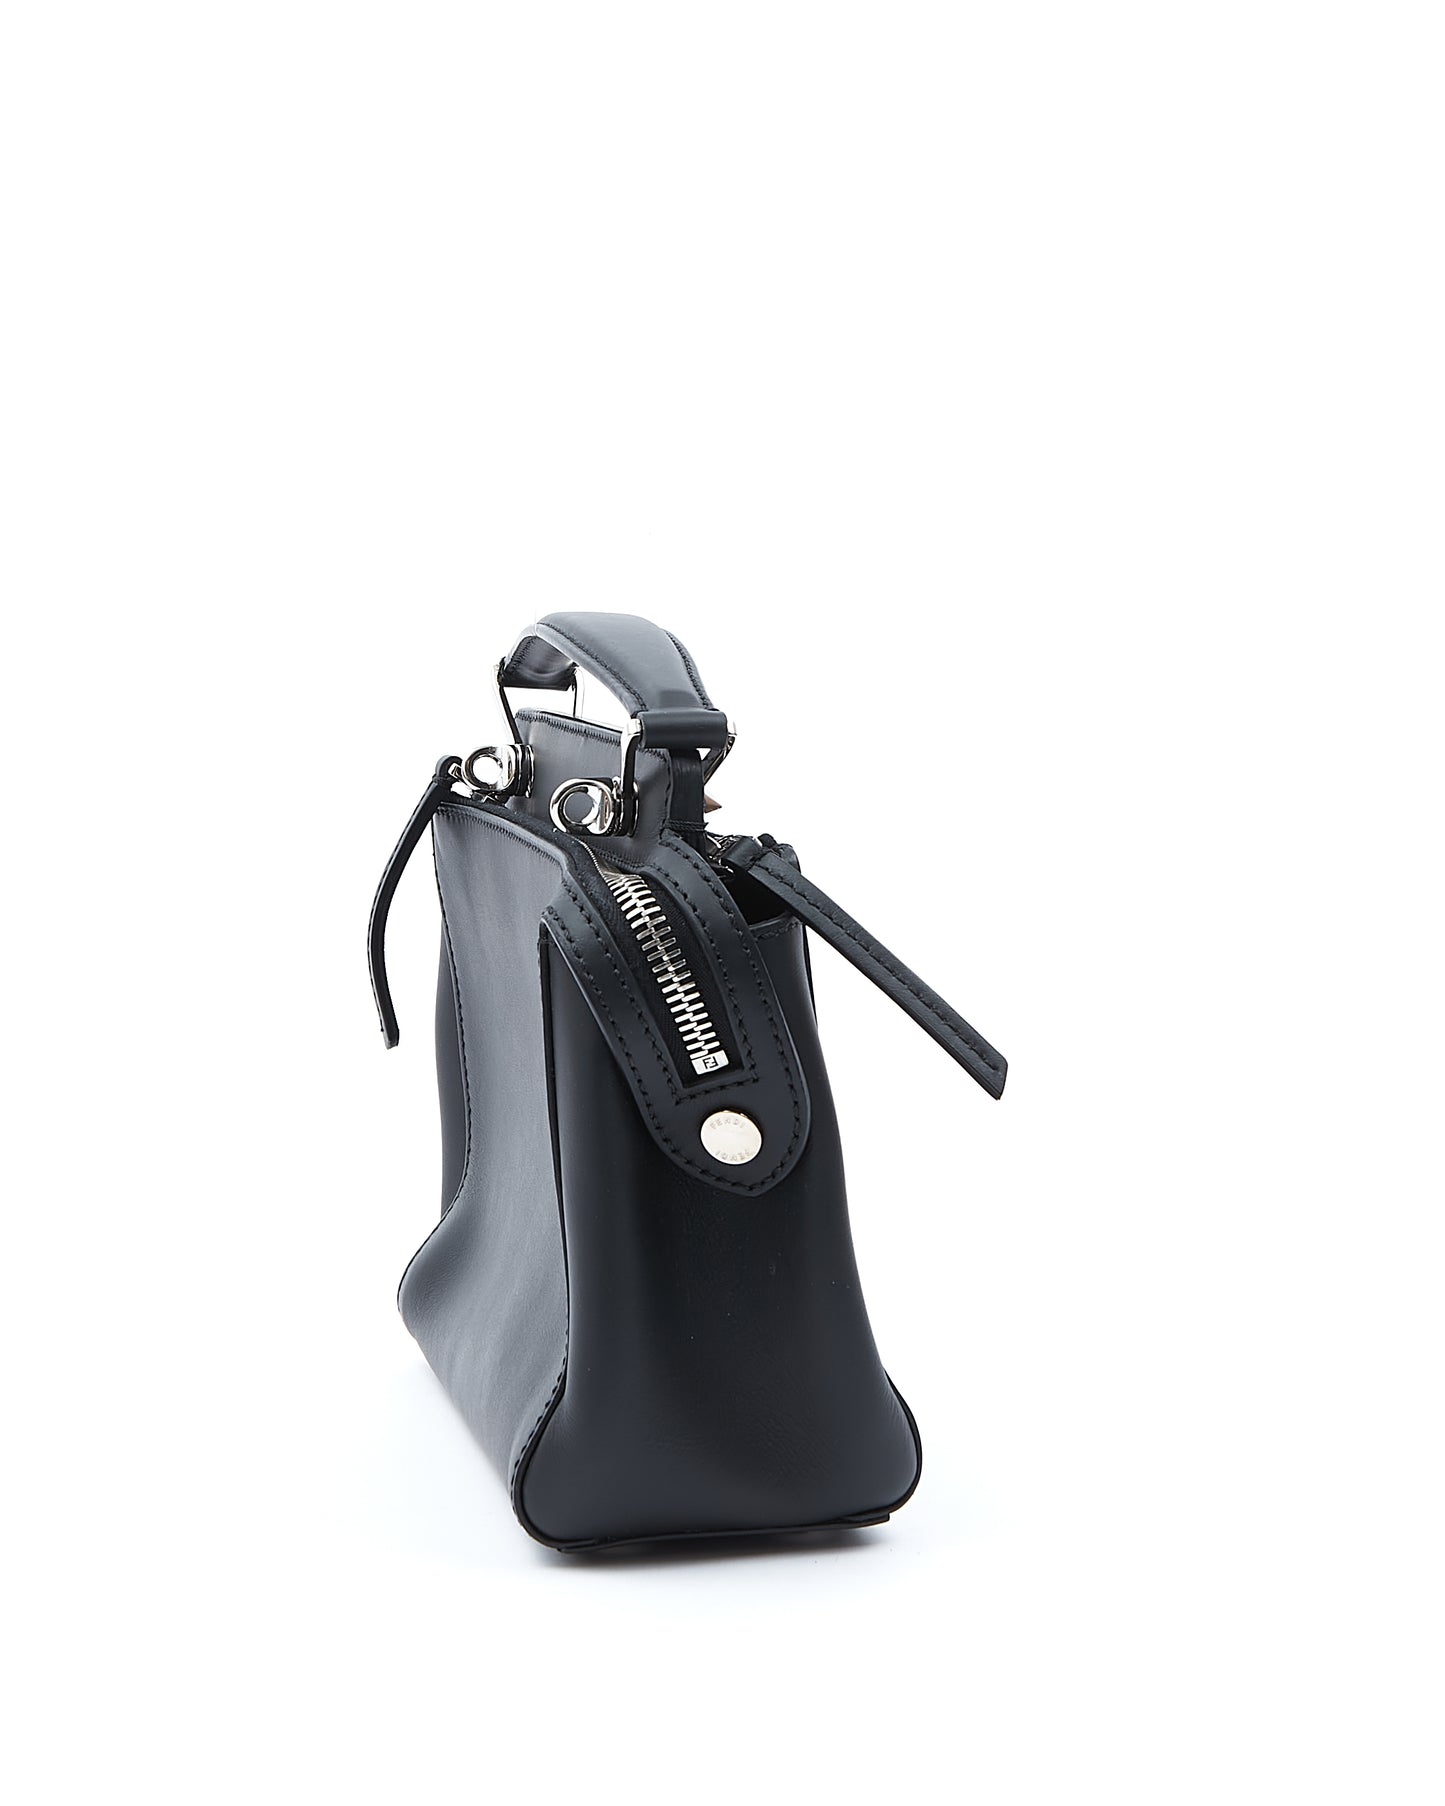 Fendi Black Leather Whipstitch Dotcom Small Bag